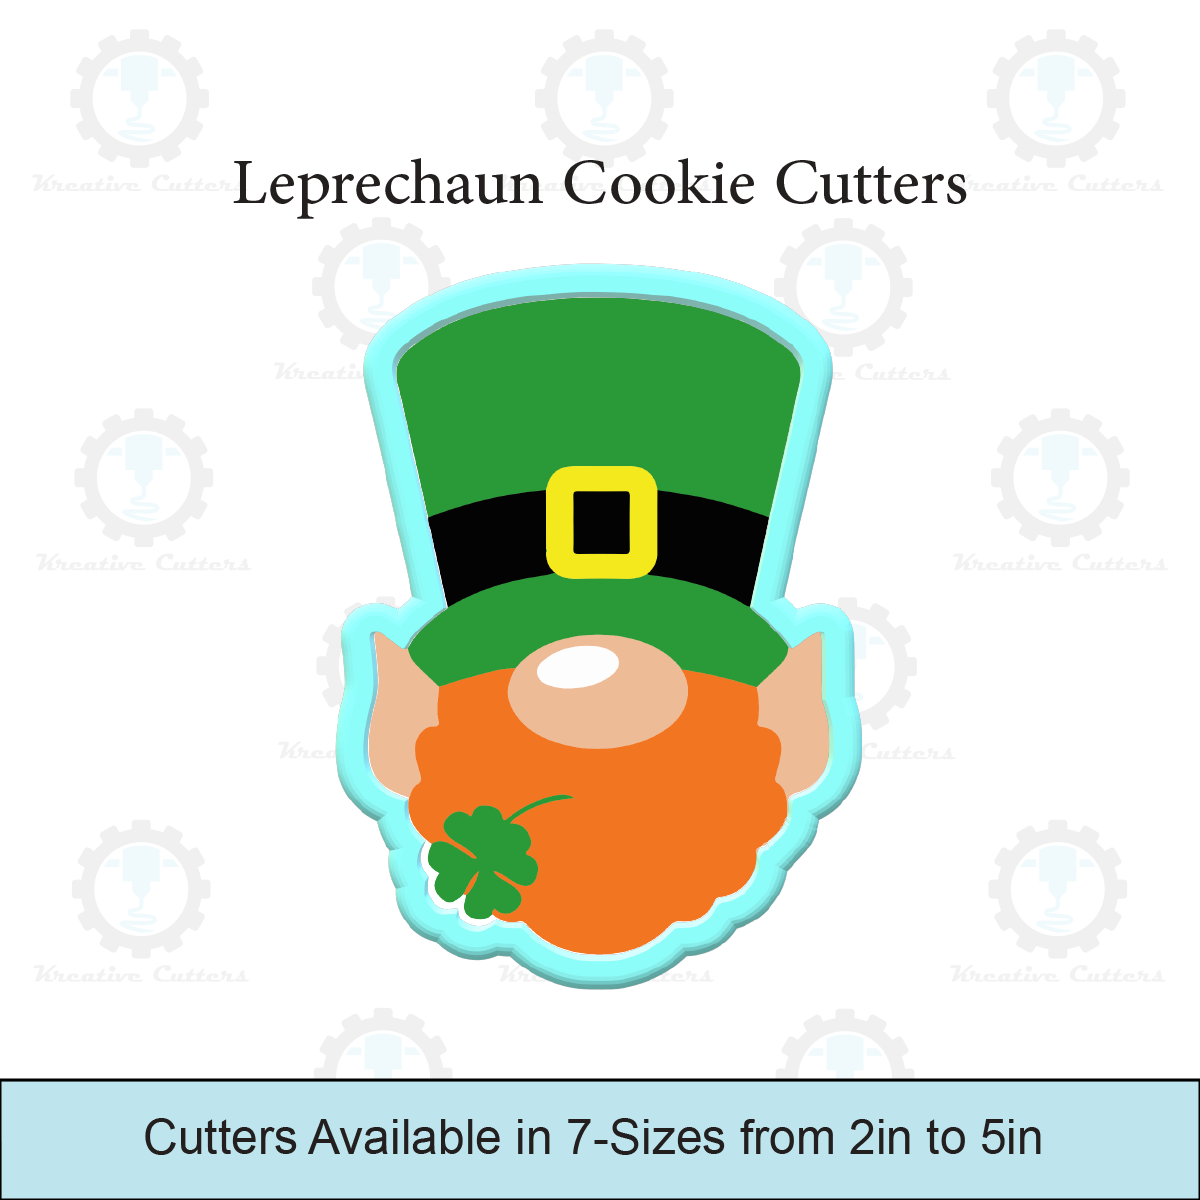 Leprechaun Cookie Cutters